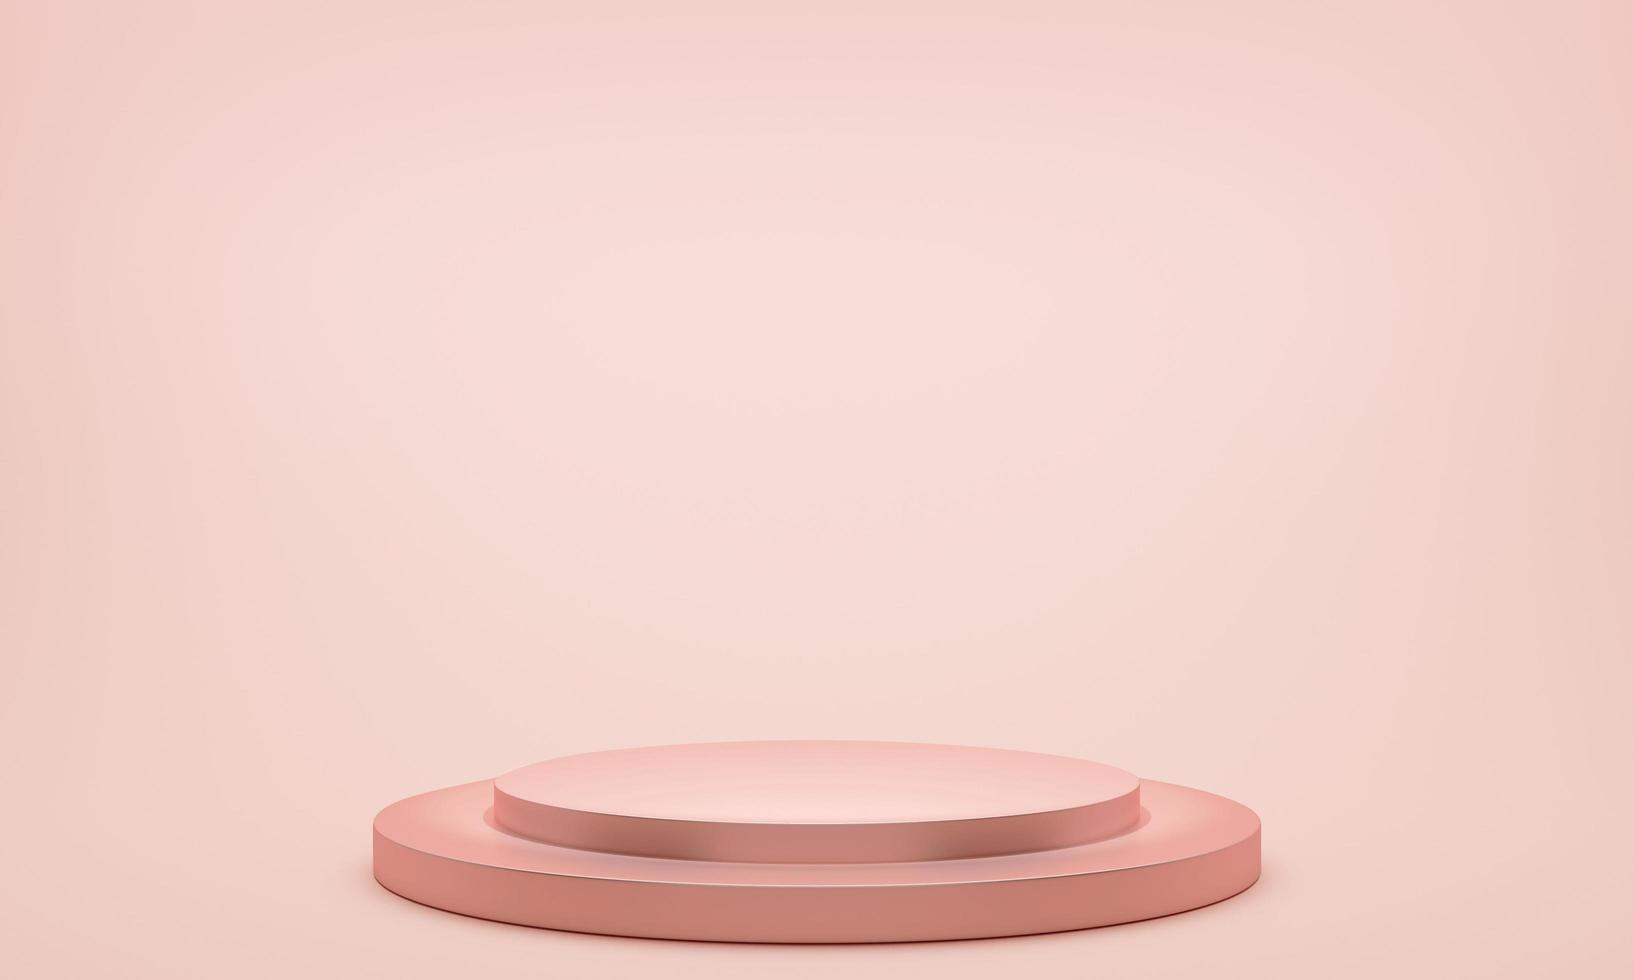 Podium de vitrine minimale de rendu 3D sur fond rose photo